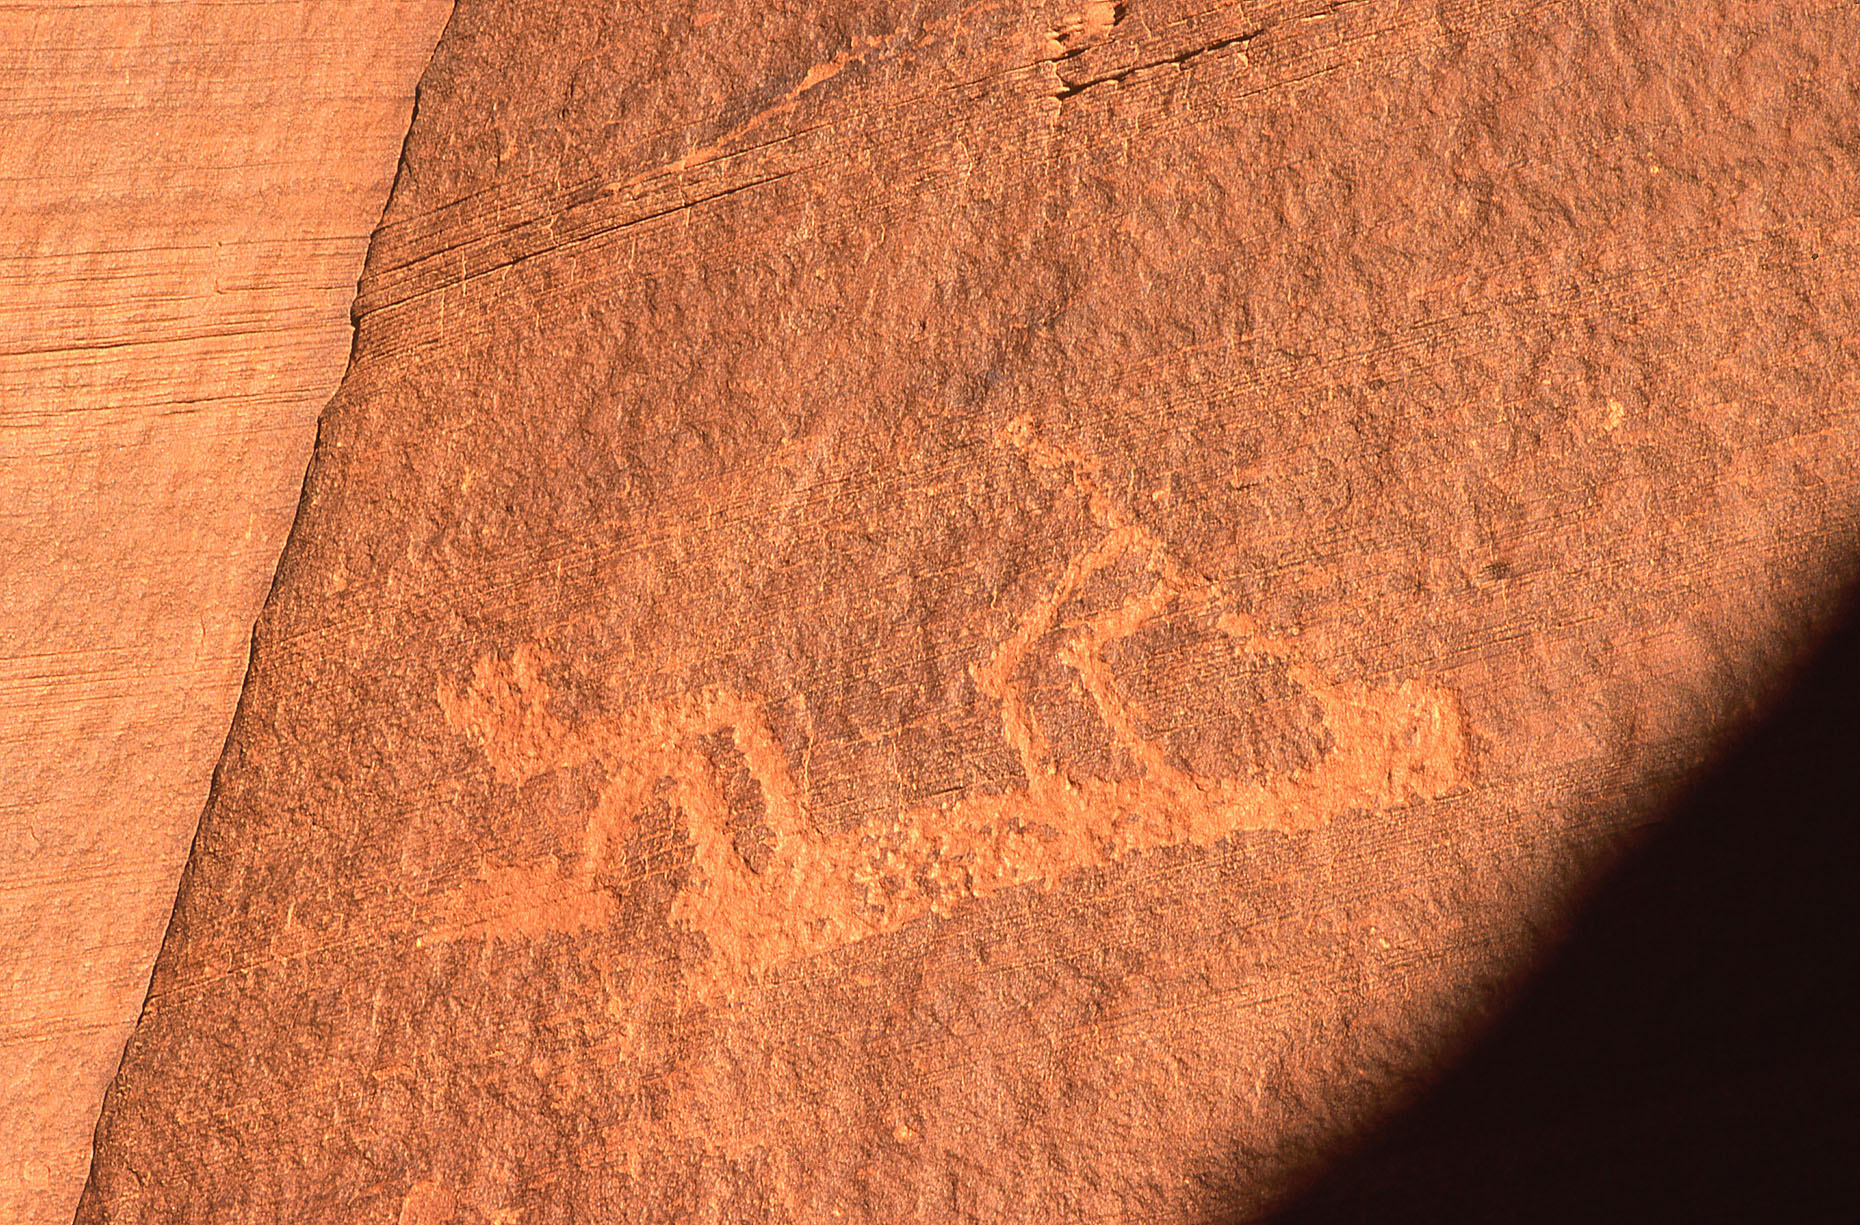 Kokopelli, John Annerino, Monument Valley Navajo Tribal Park, Utah-Arizona